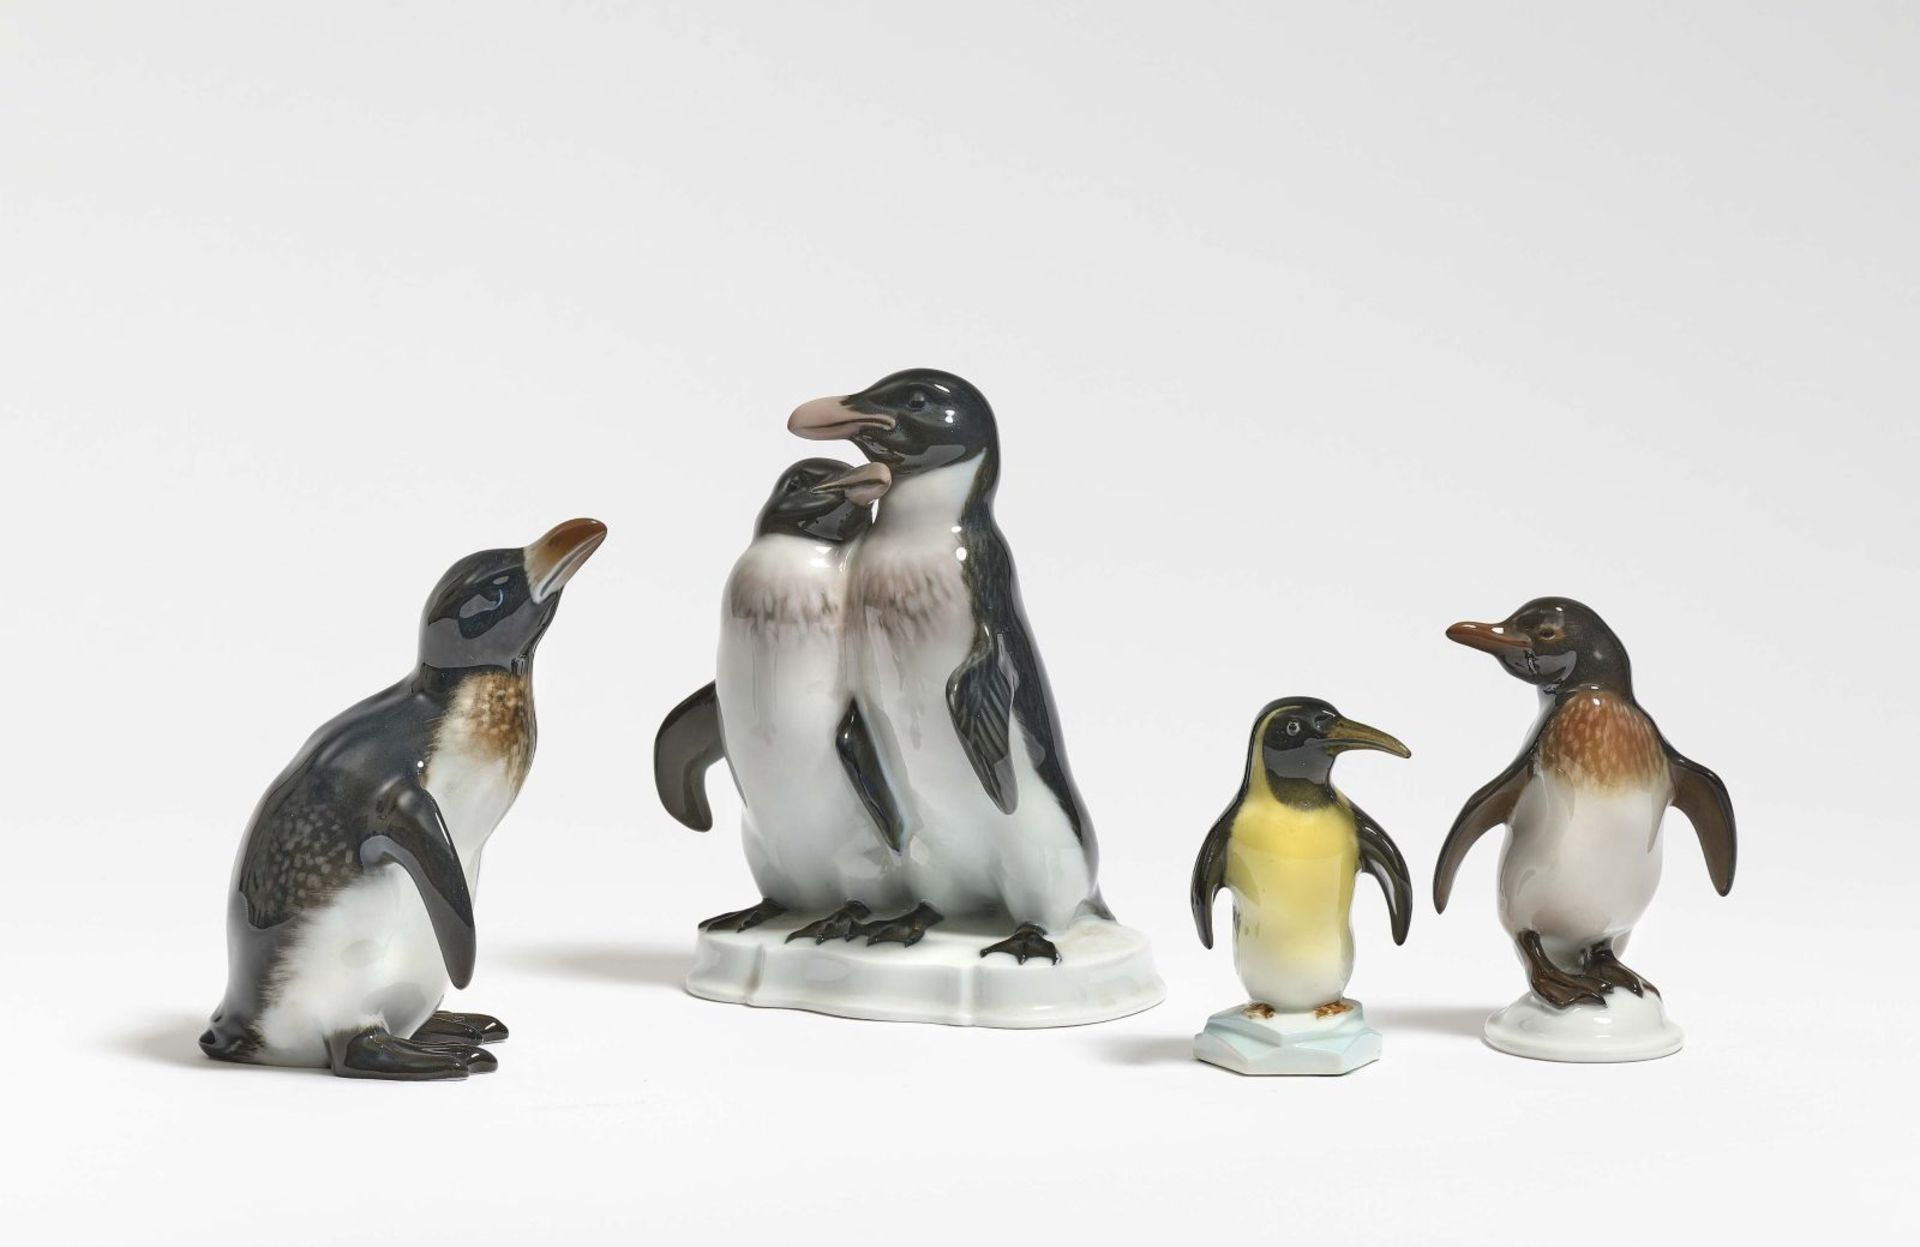 Vier Pinguine